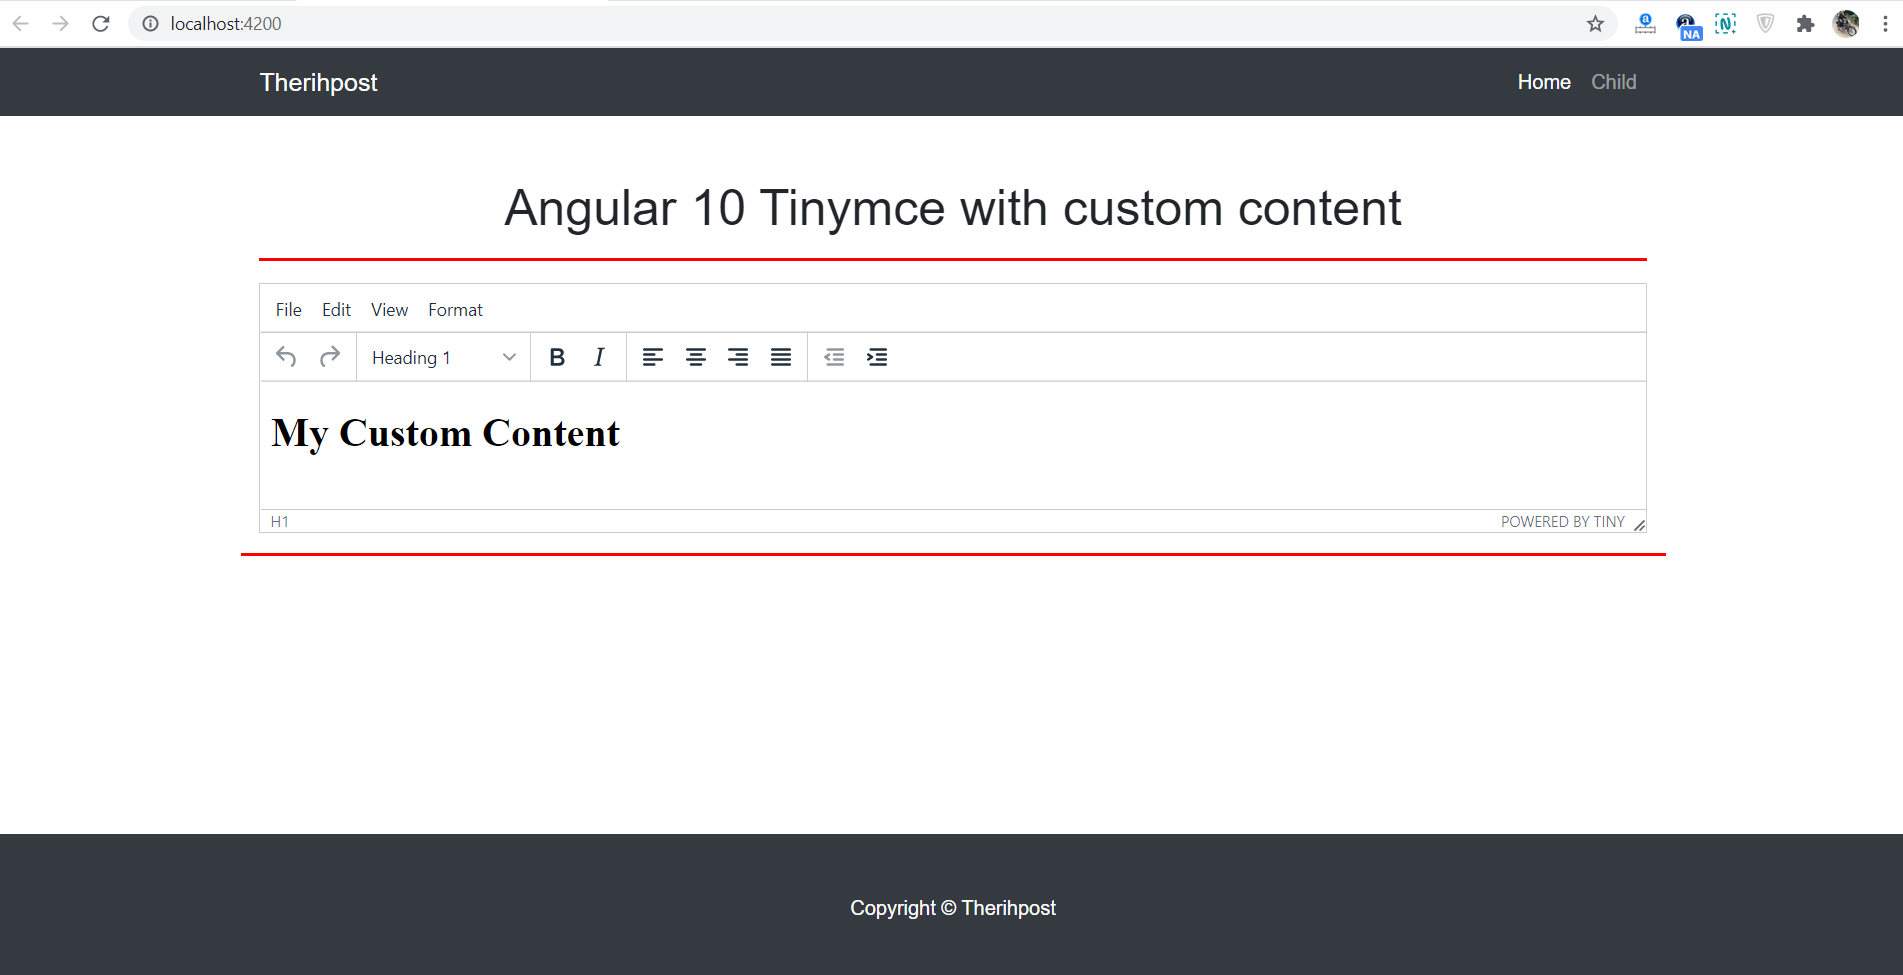 Angular 10 tinymce with custom content